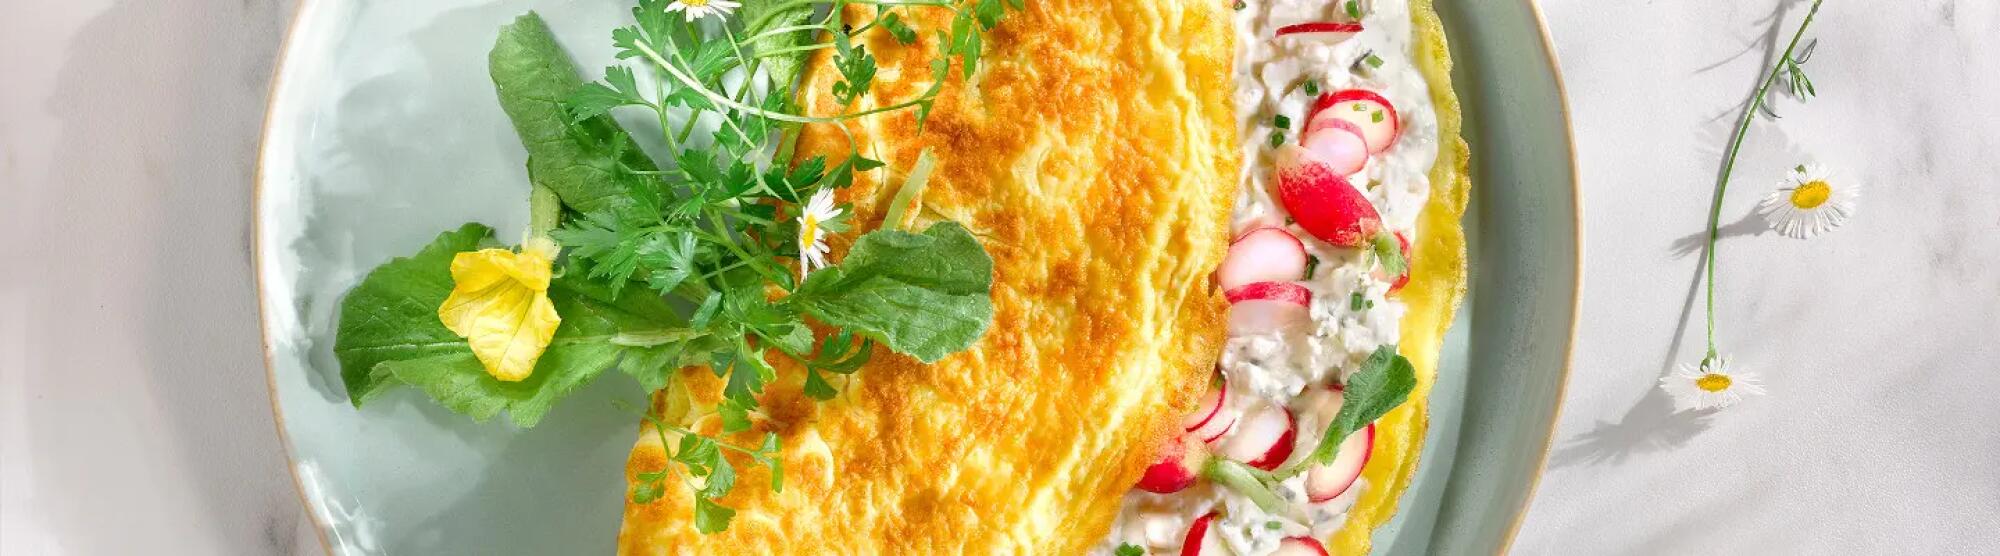 Recette : Omelette printanière au fromage ail & fines herbes